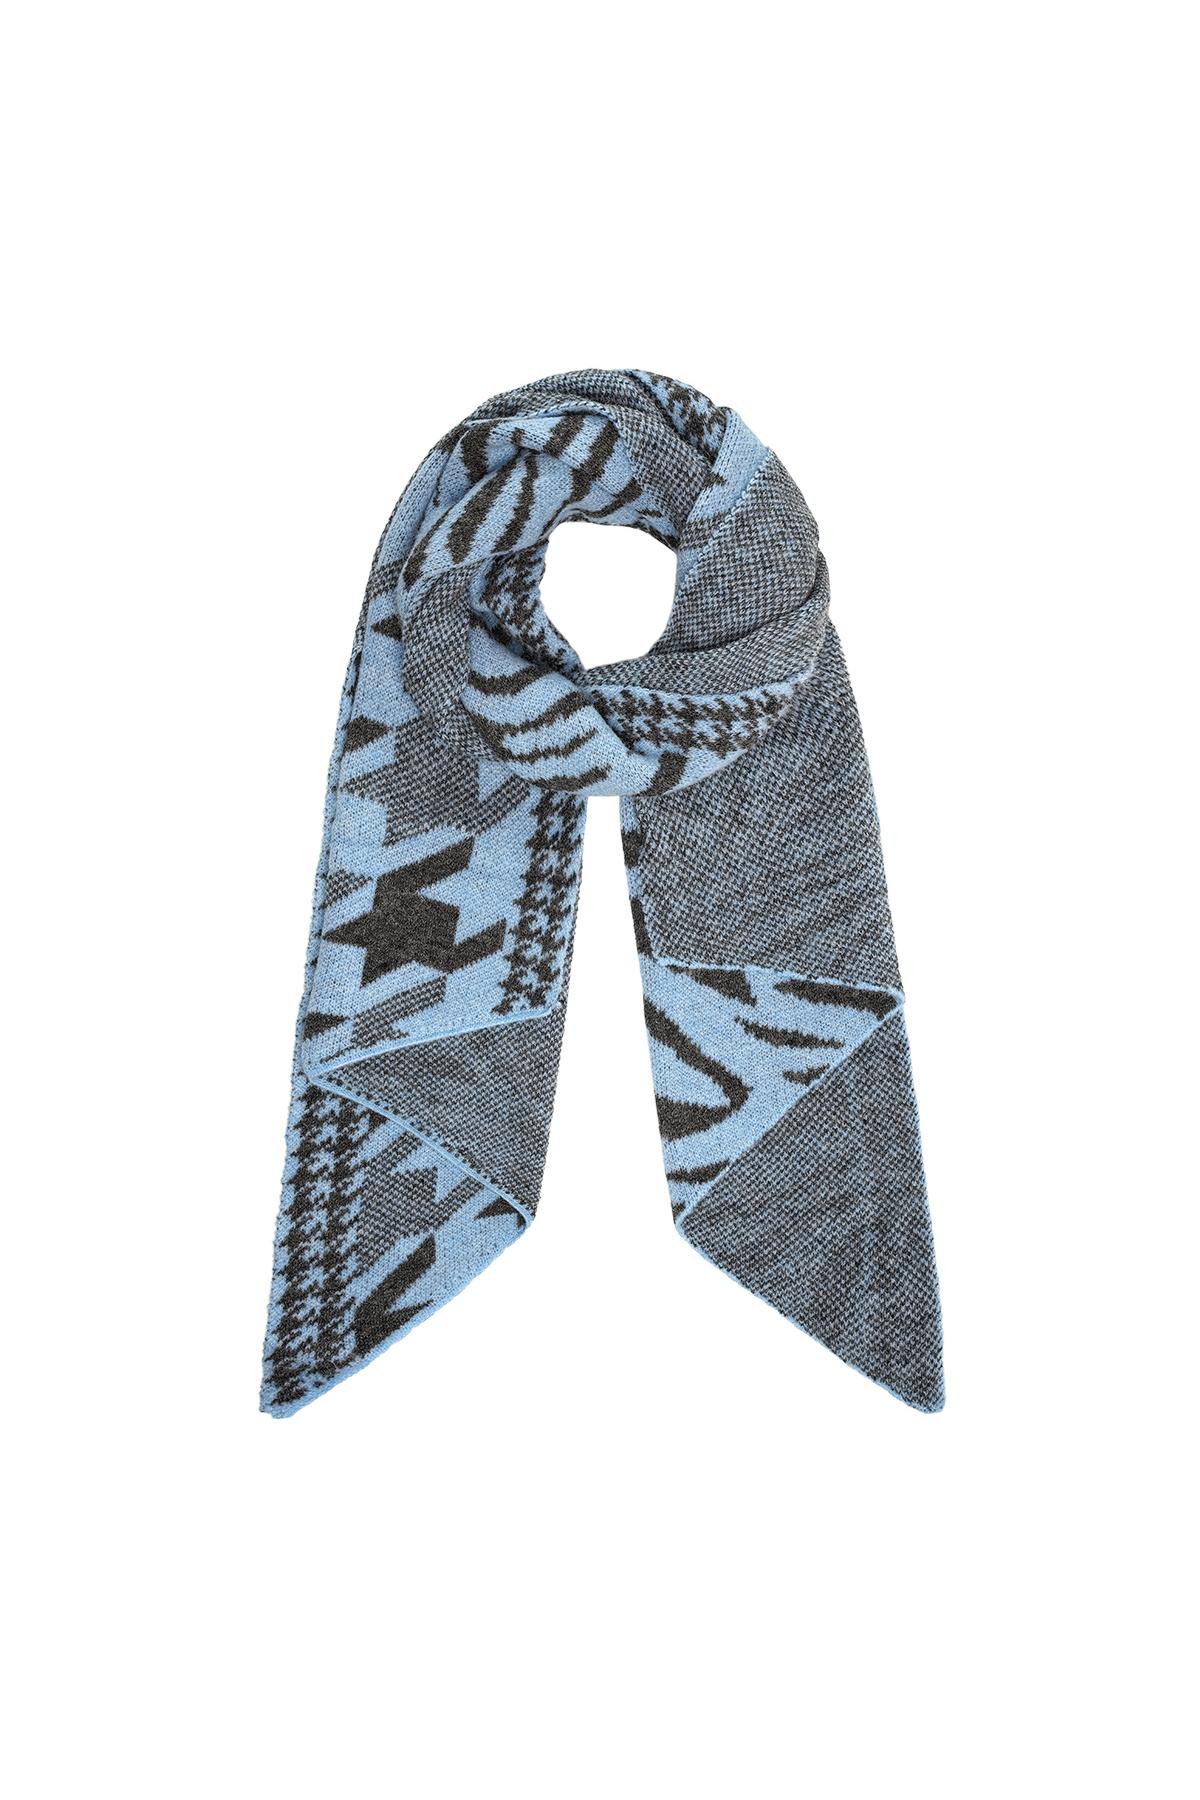 Sjaal gezellig winter Blauw Acryl h5 